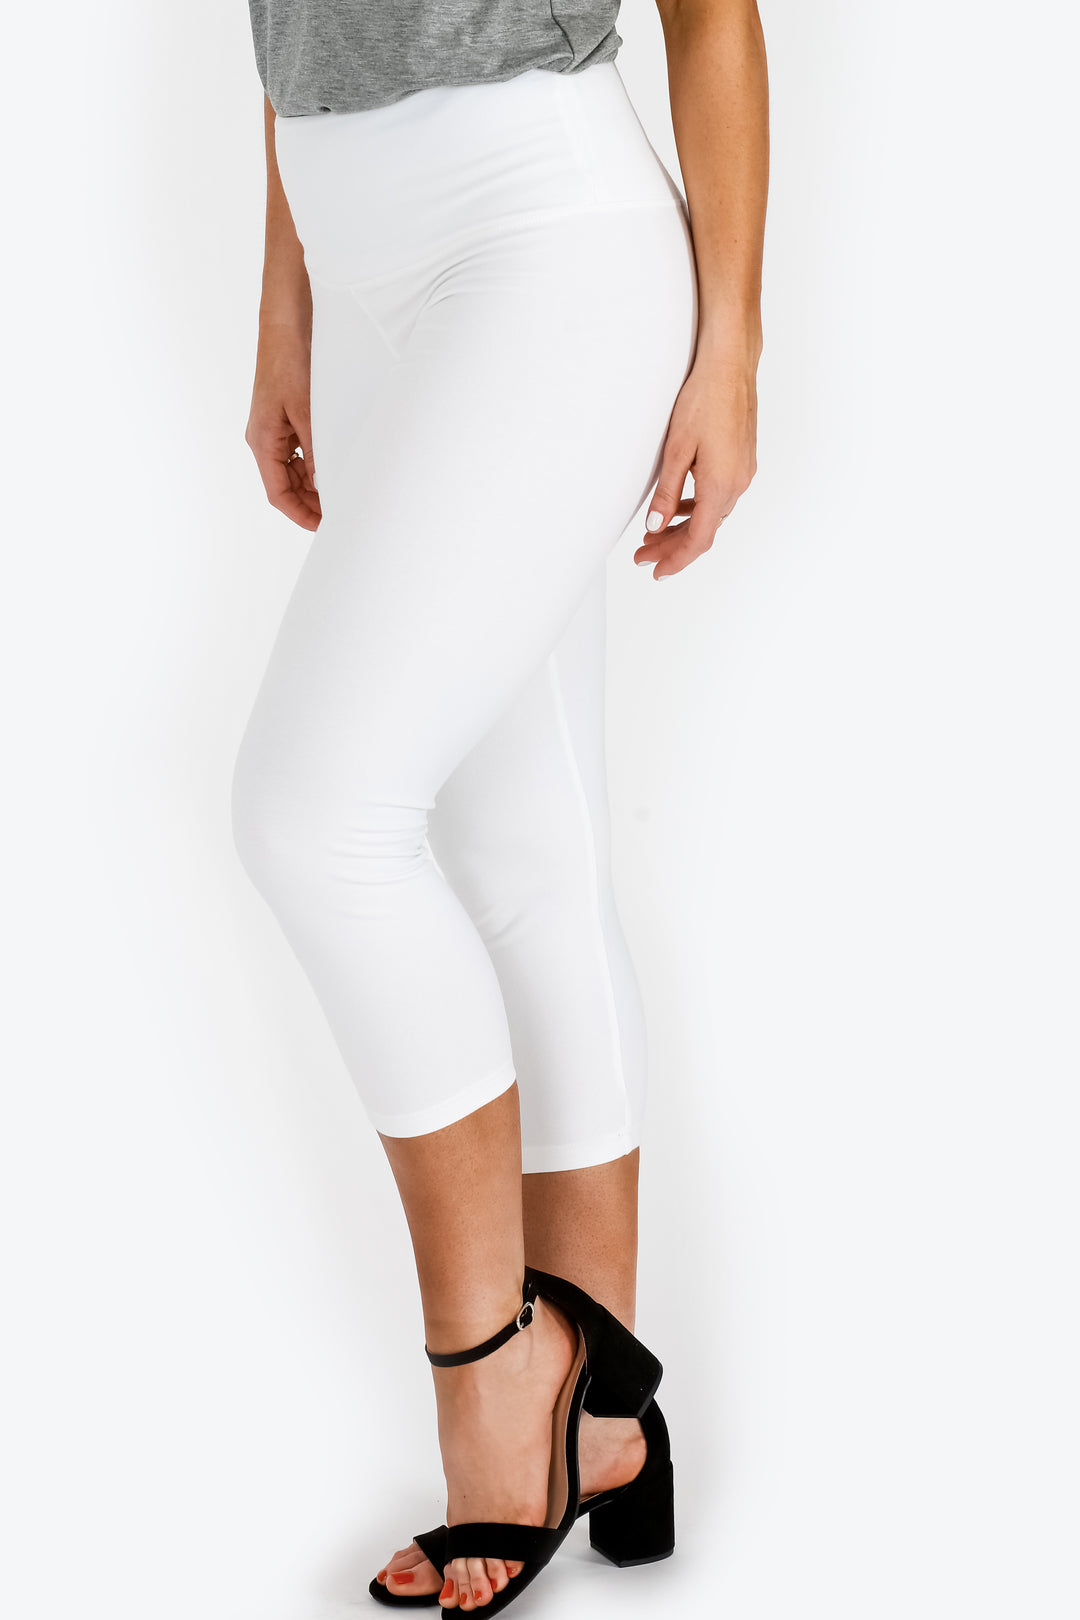 Intro Plus Size Love the Fit Capri Leggings | Dillard's